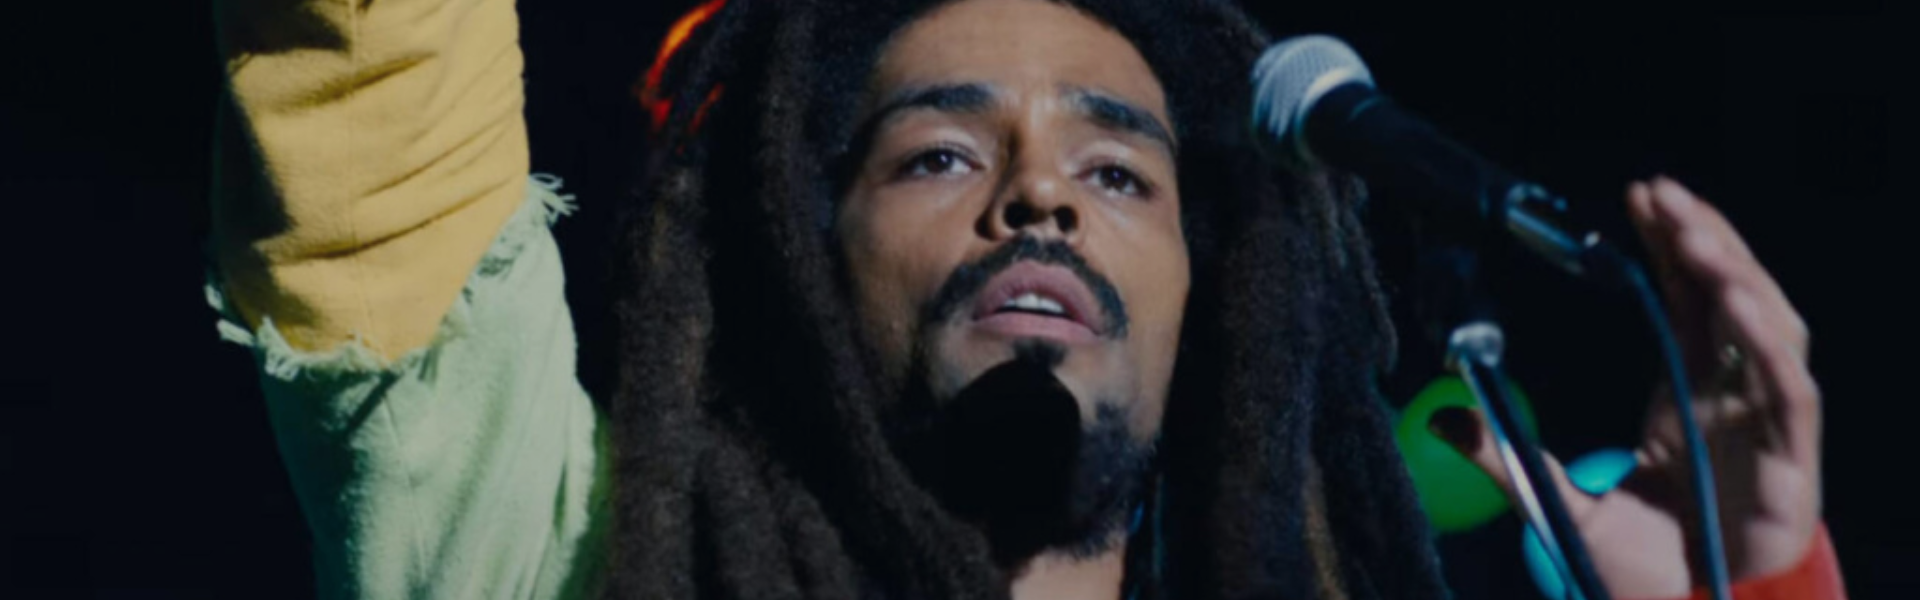 Bob Marley: La leyenda